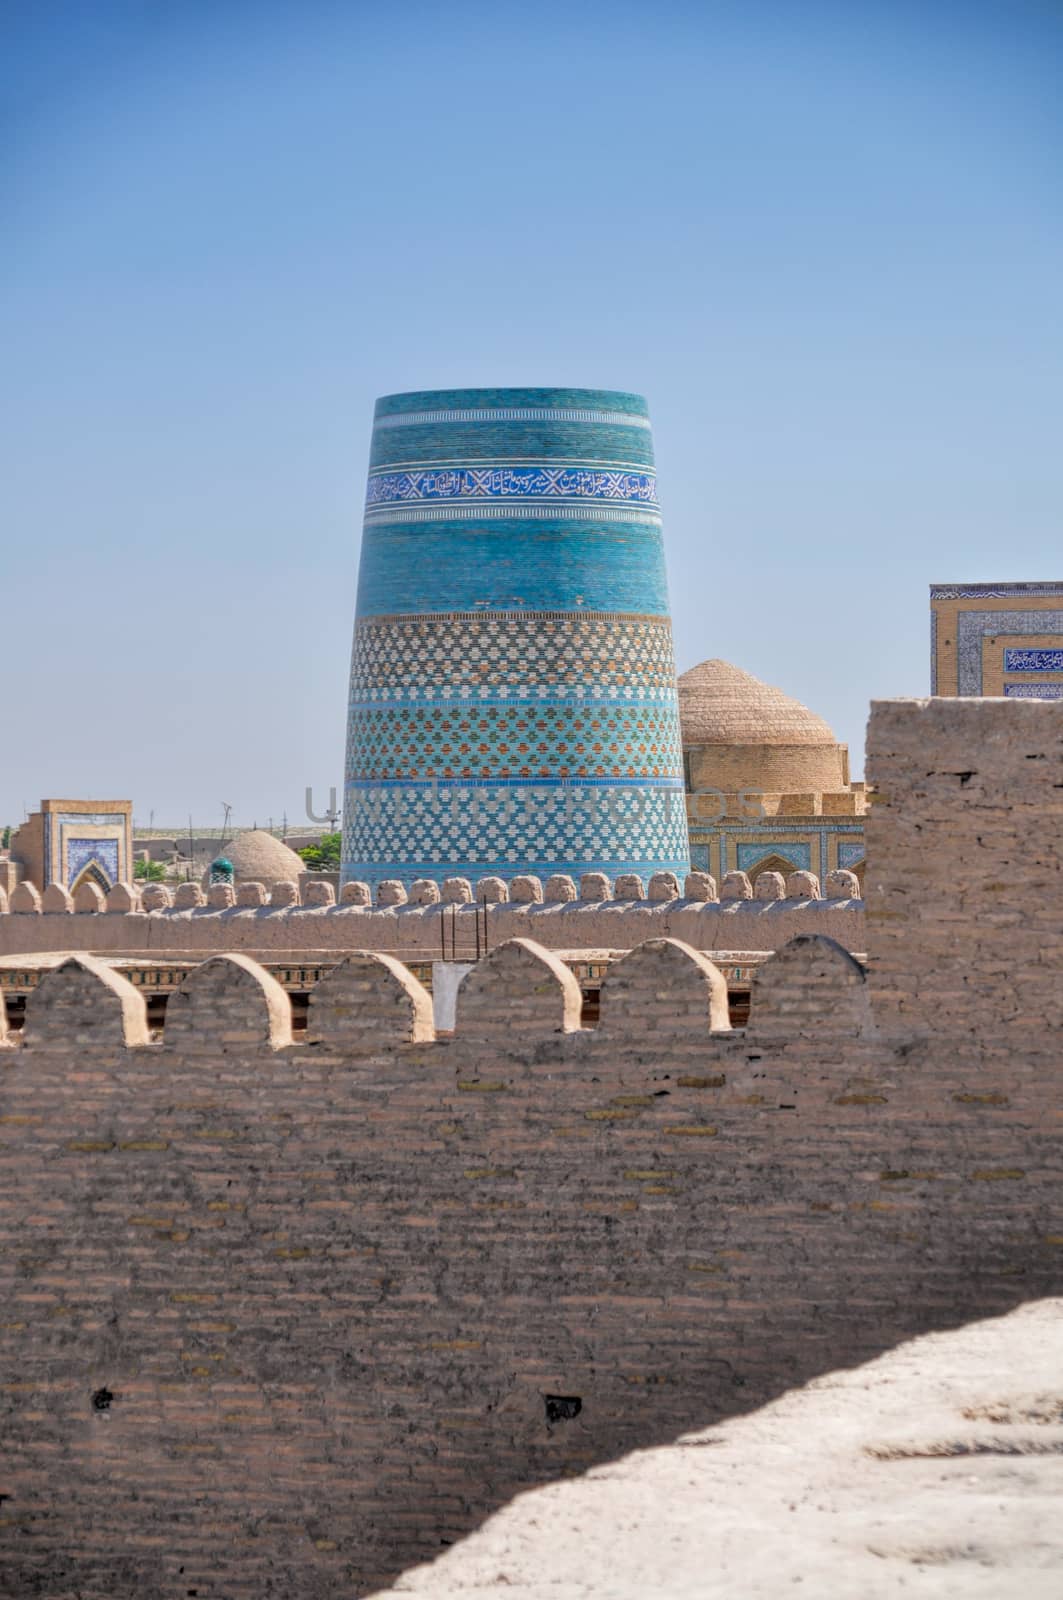 Blue decorated minaret in Khiva, historical town in Uzbekistan